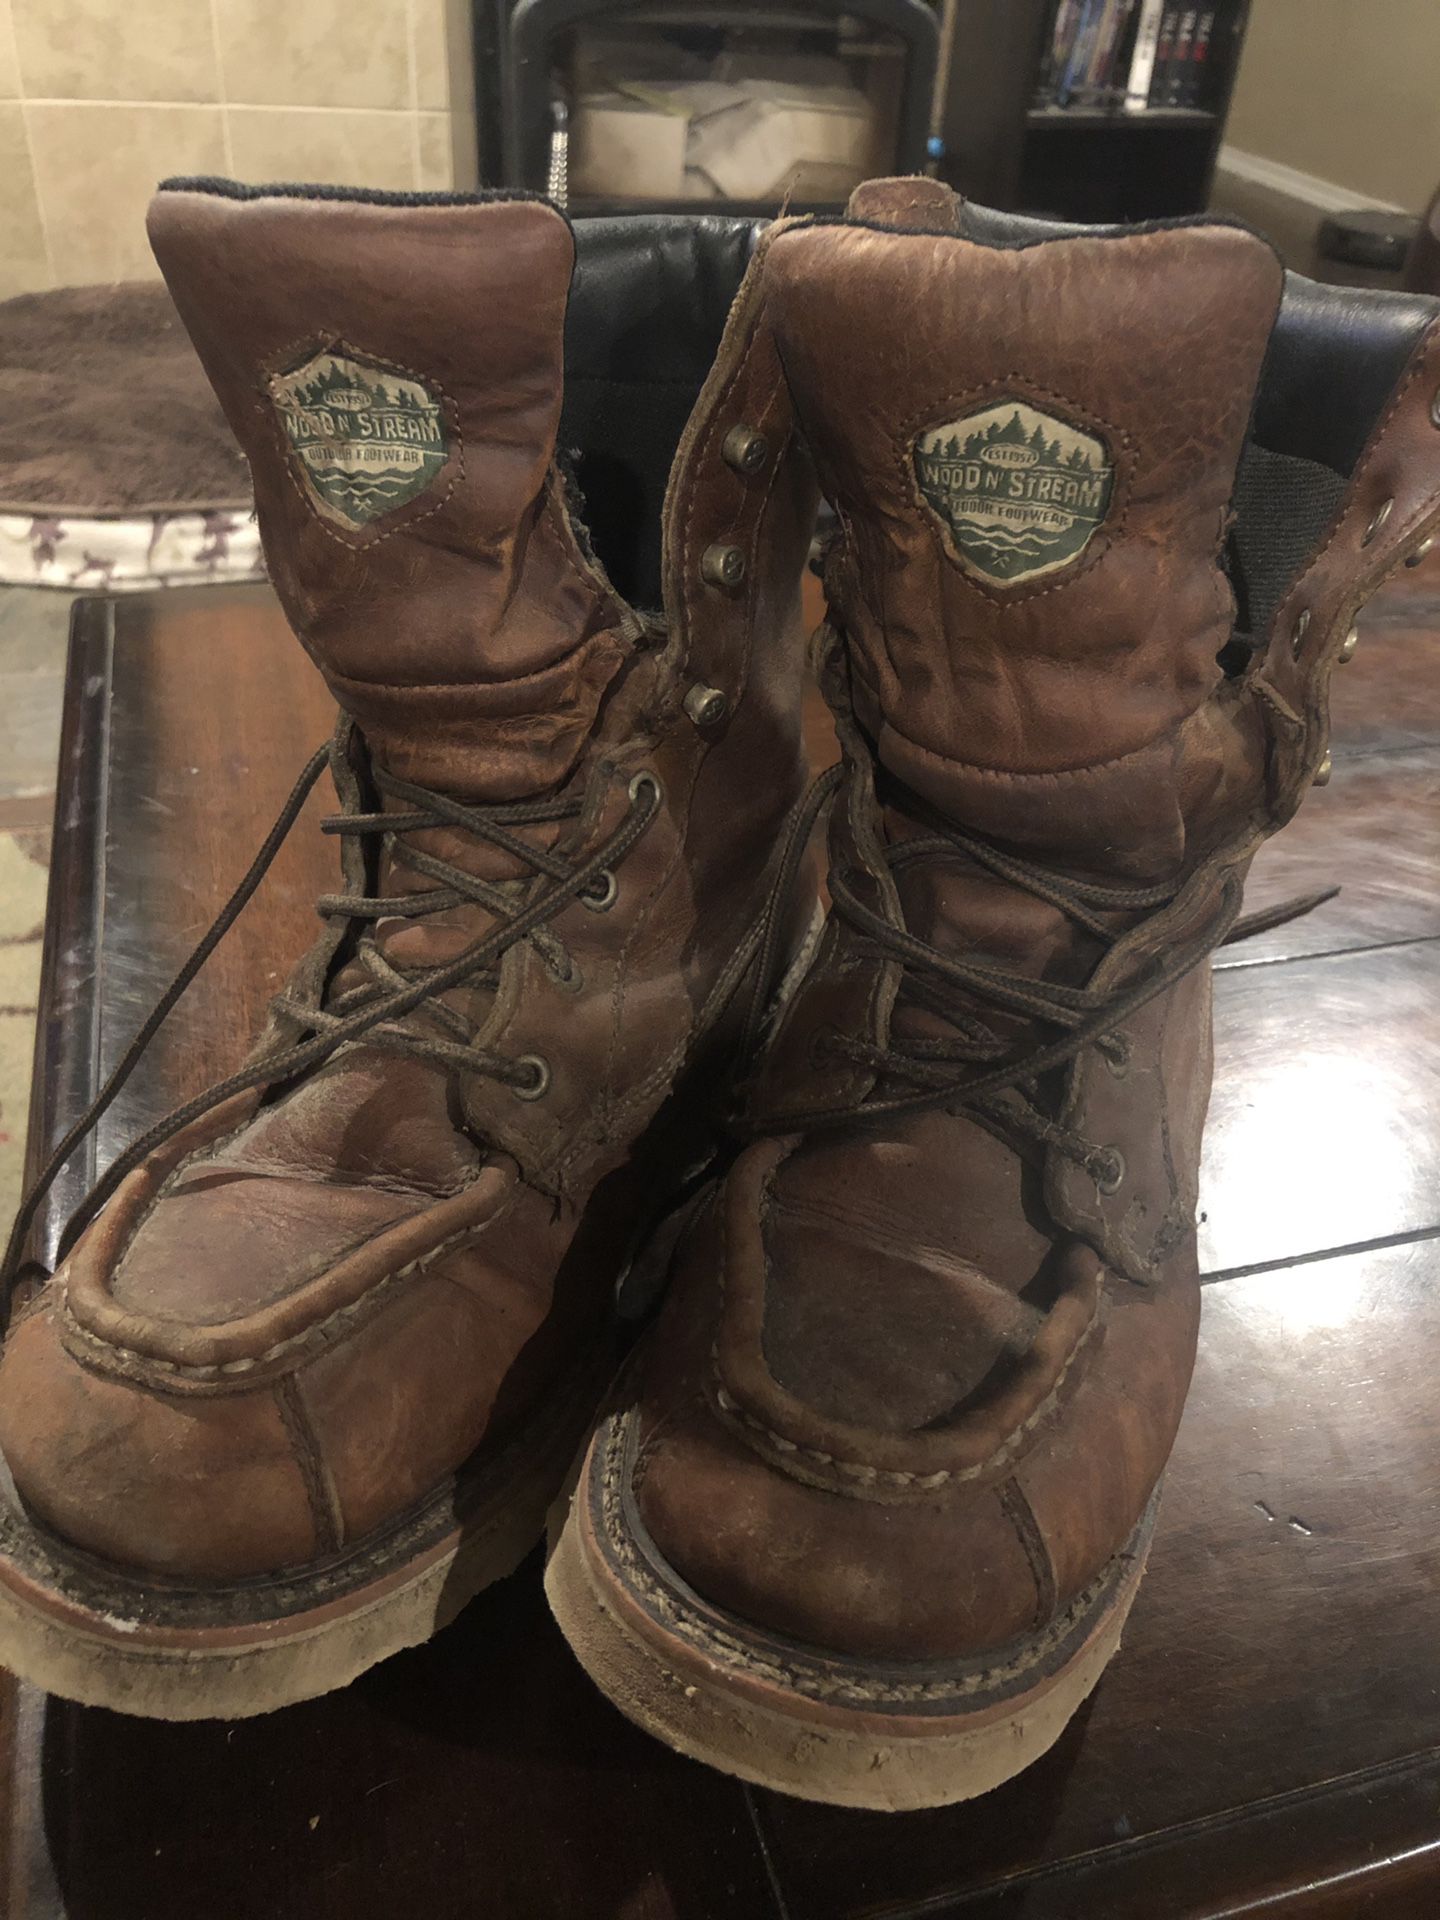 Wood N’ Stream work boots - men’s size 8 1/2